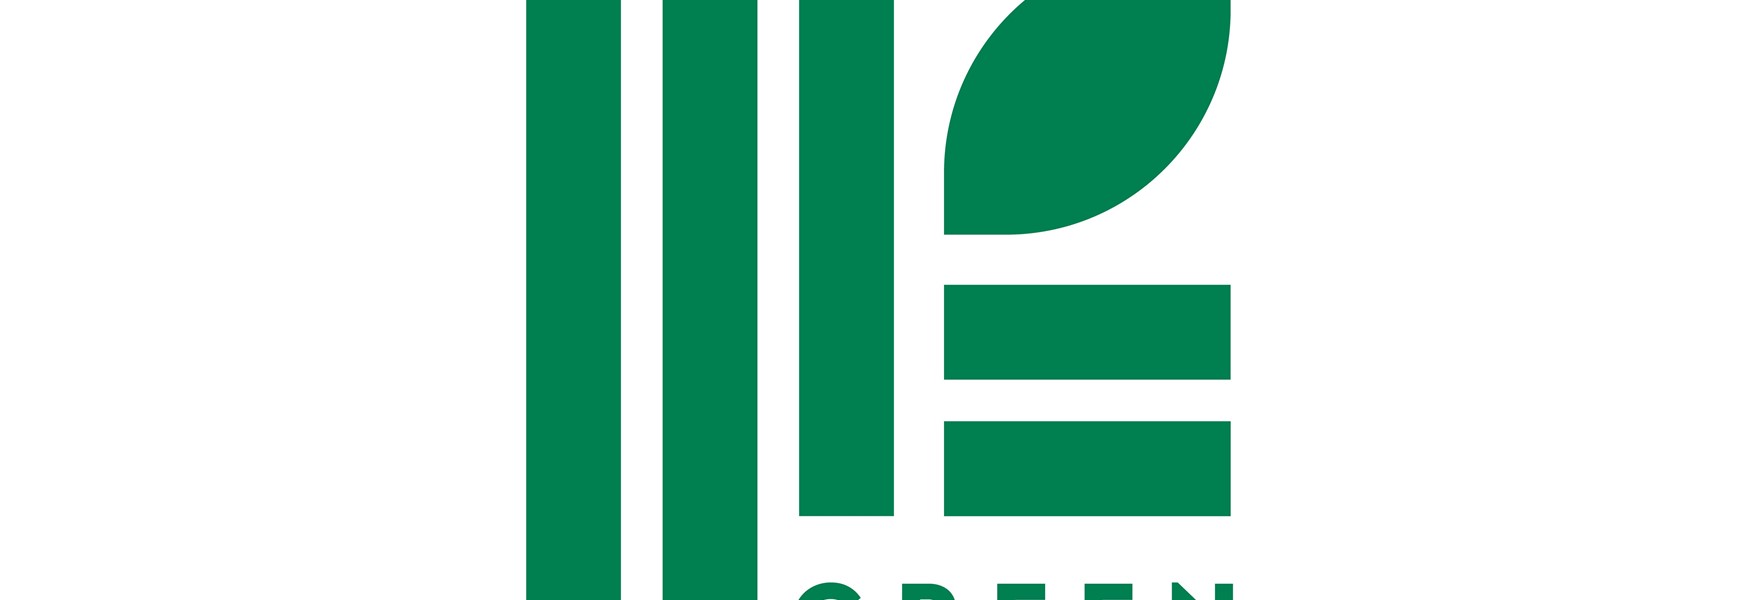 Logo Green 